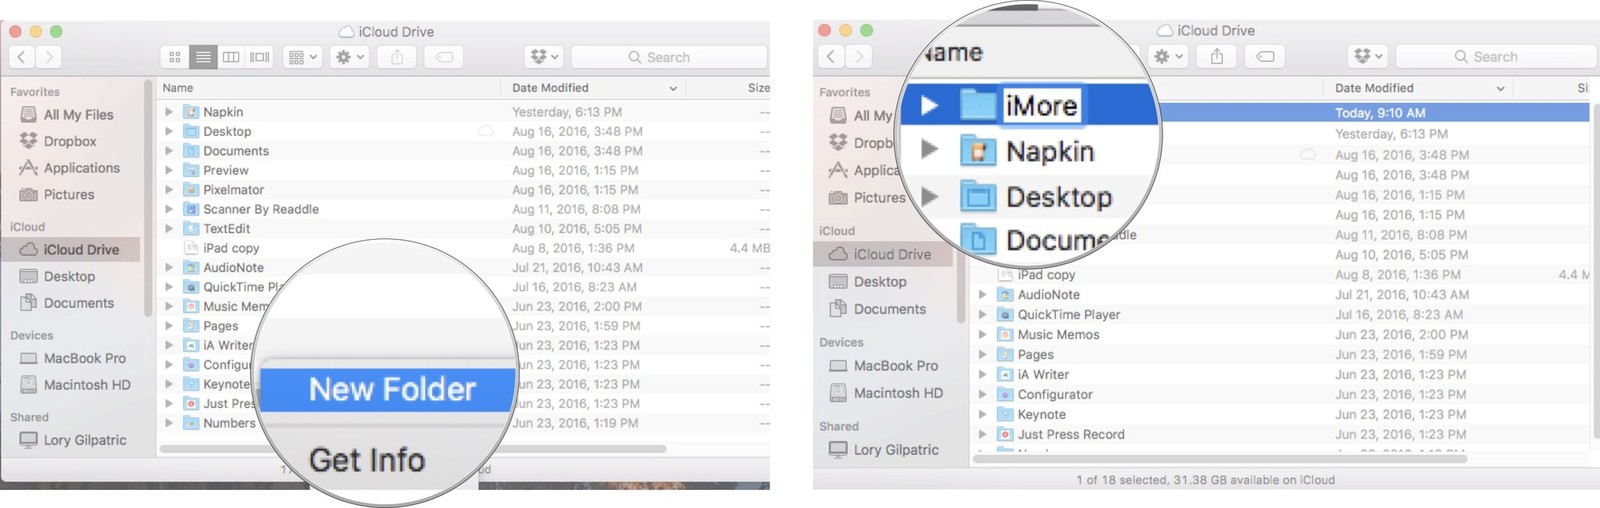 Make new folder on mac